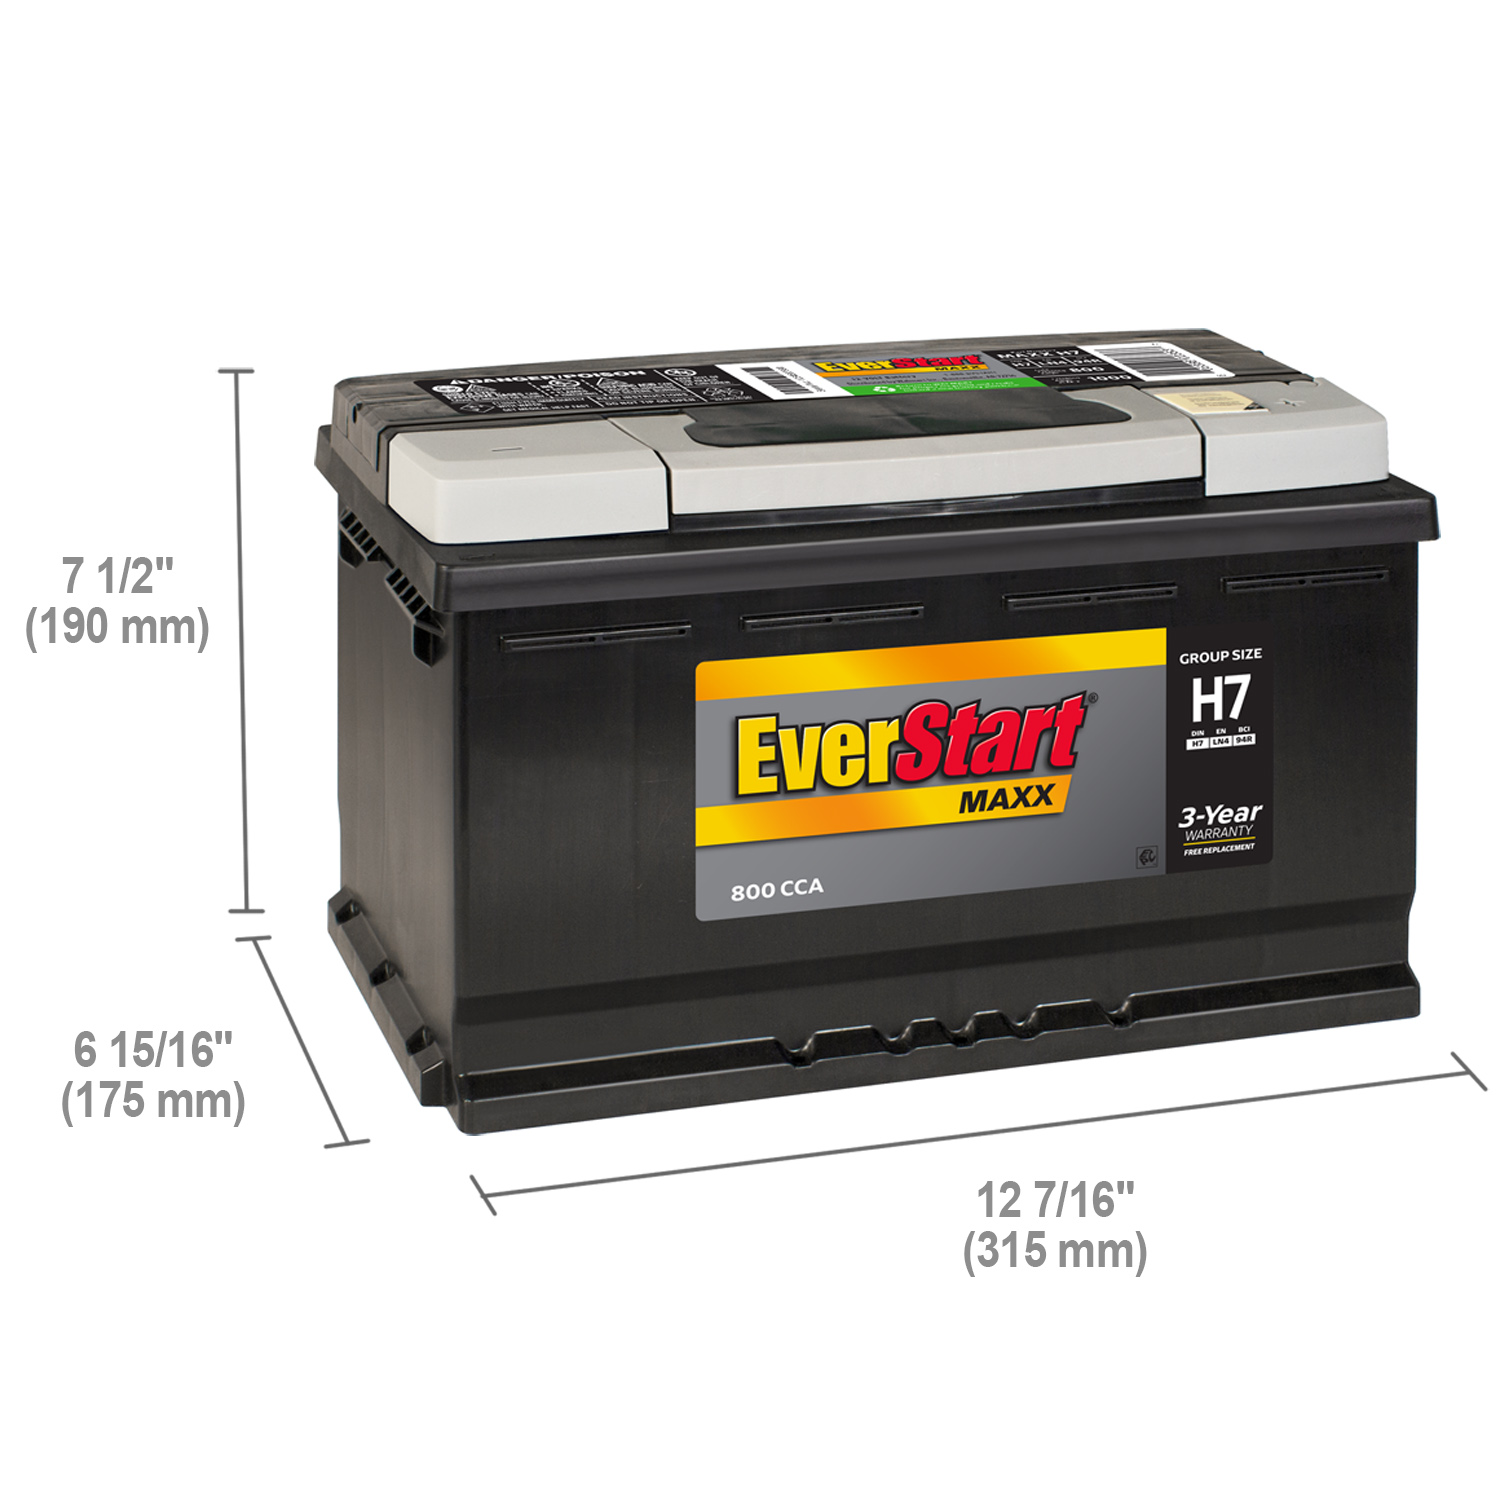 EverStart Maxx Lead Acid Automotive Battery, Group Size H7 / LN4 / 94R 12 Volt, 800 CCA - image 2 of 7